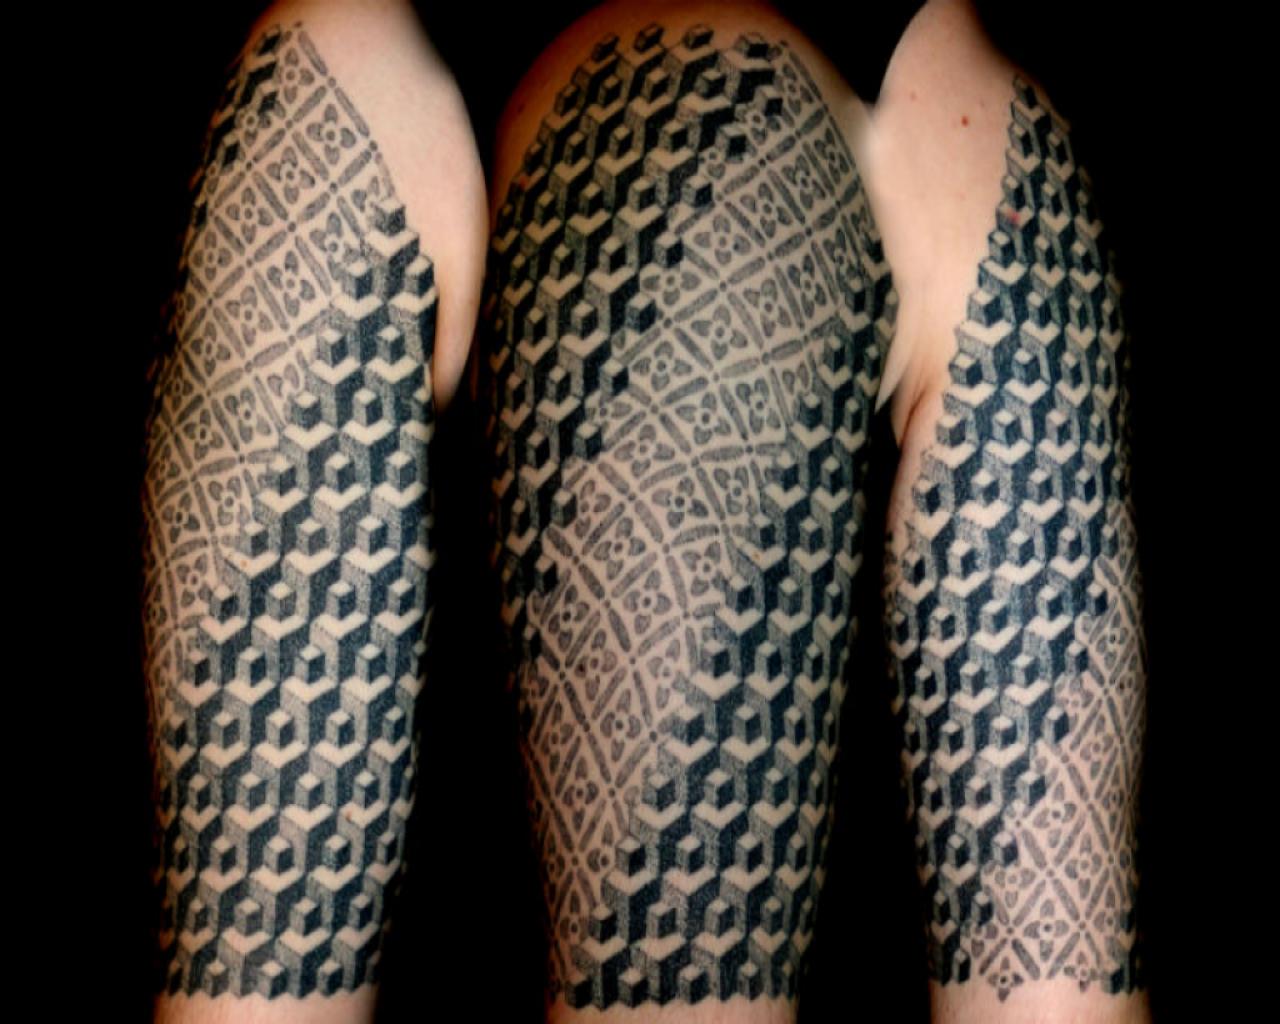 Polynesian And Escher Inspired Tattoo